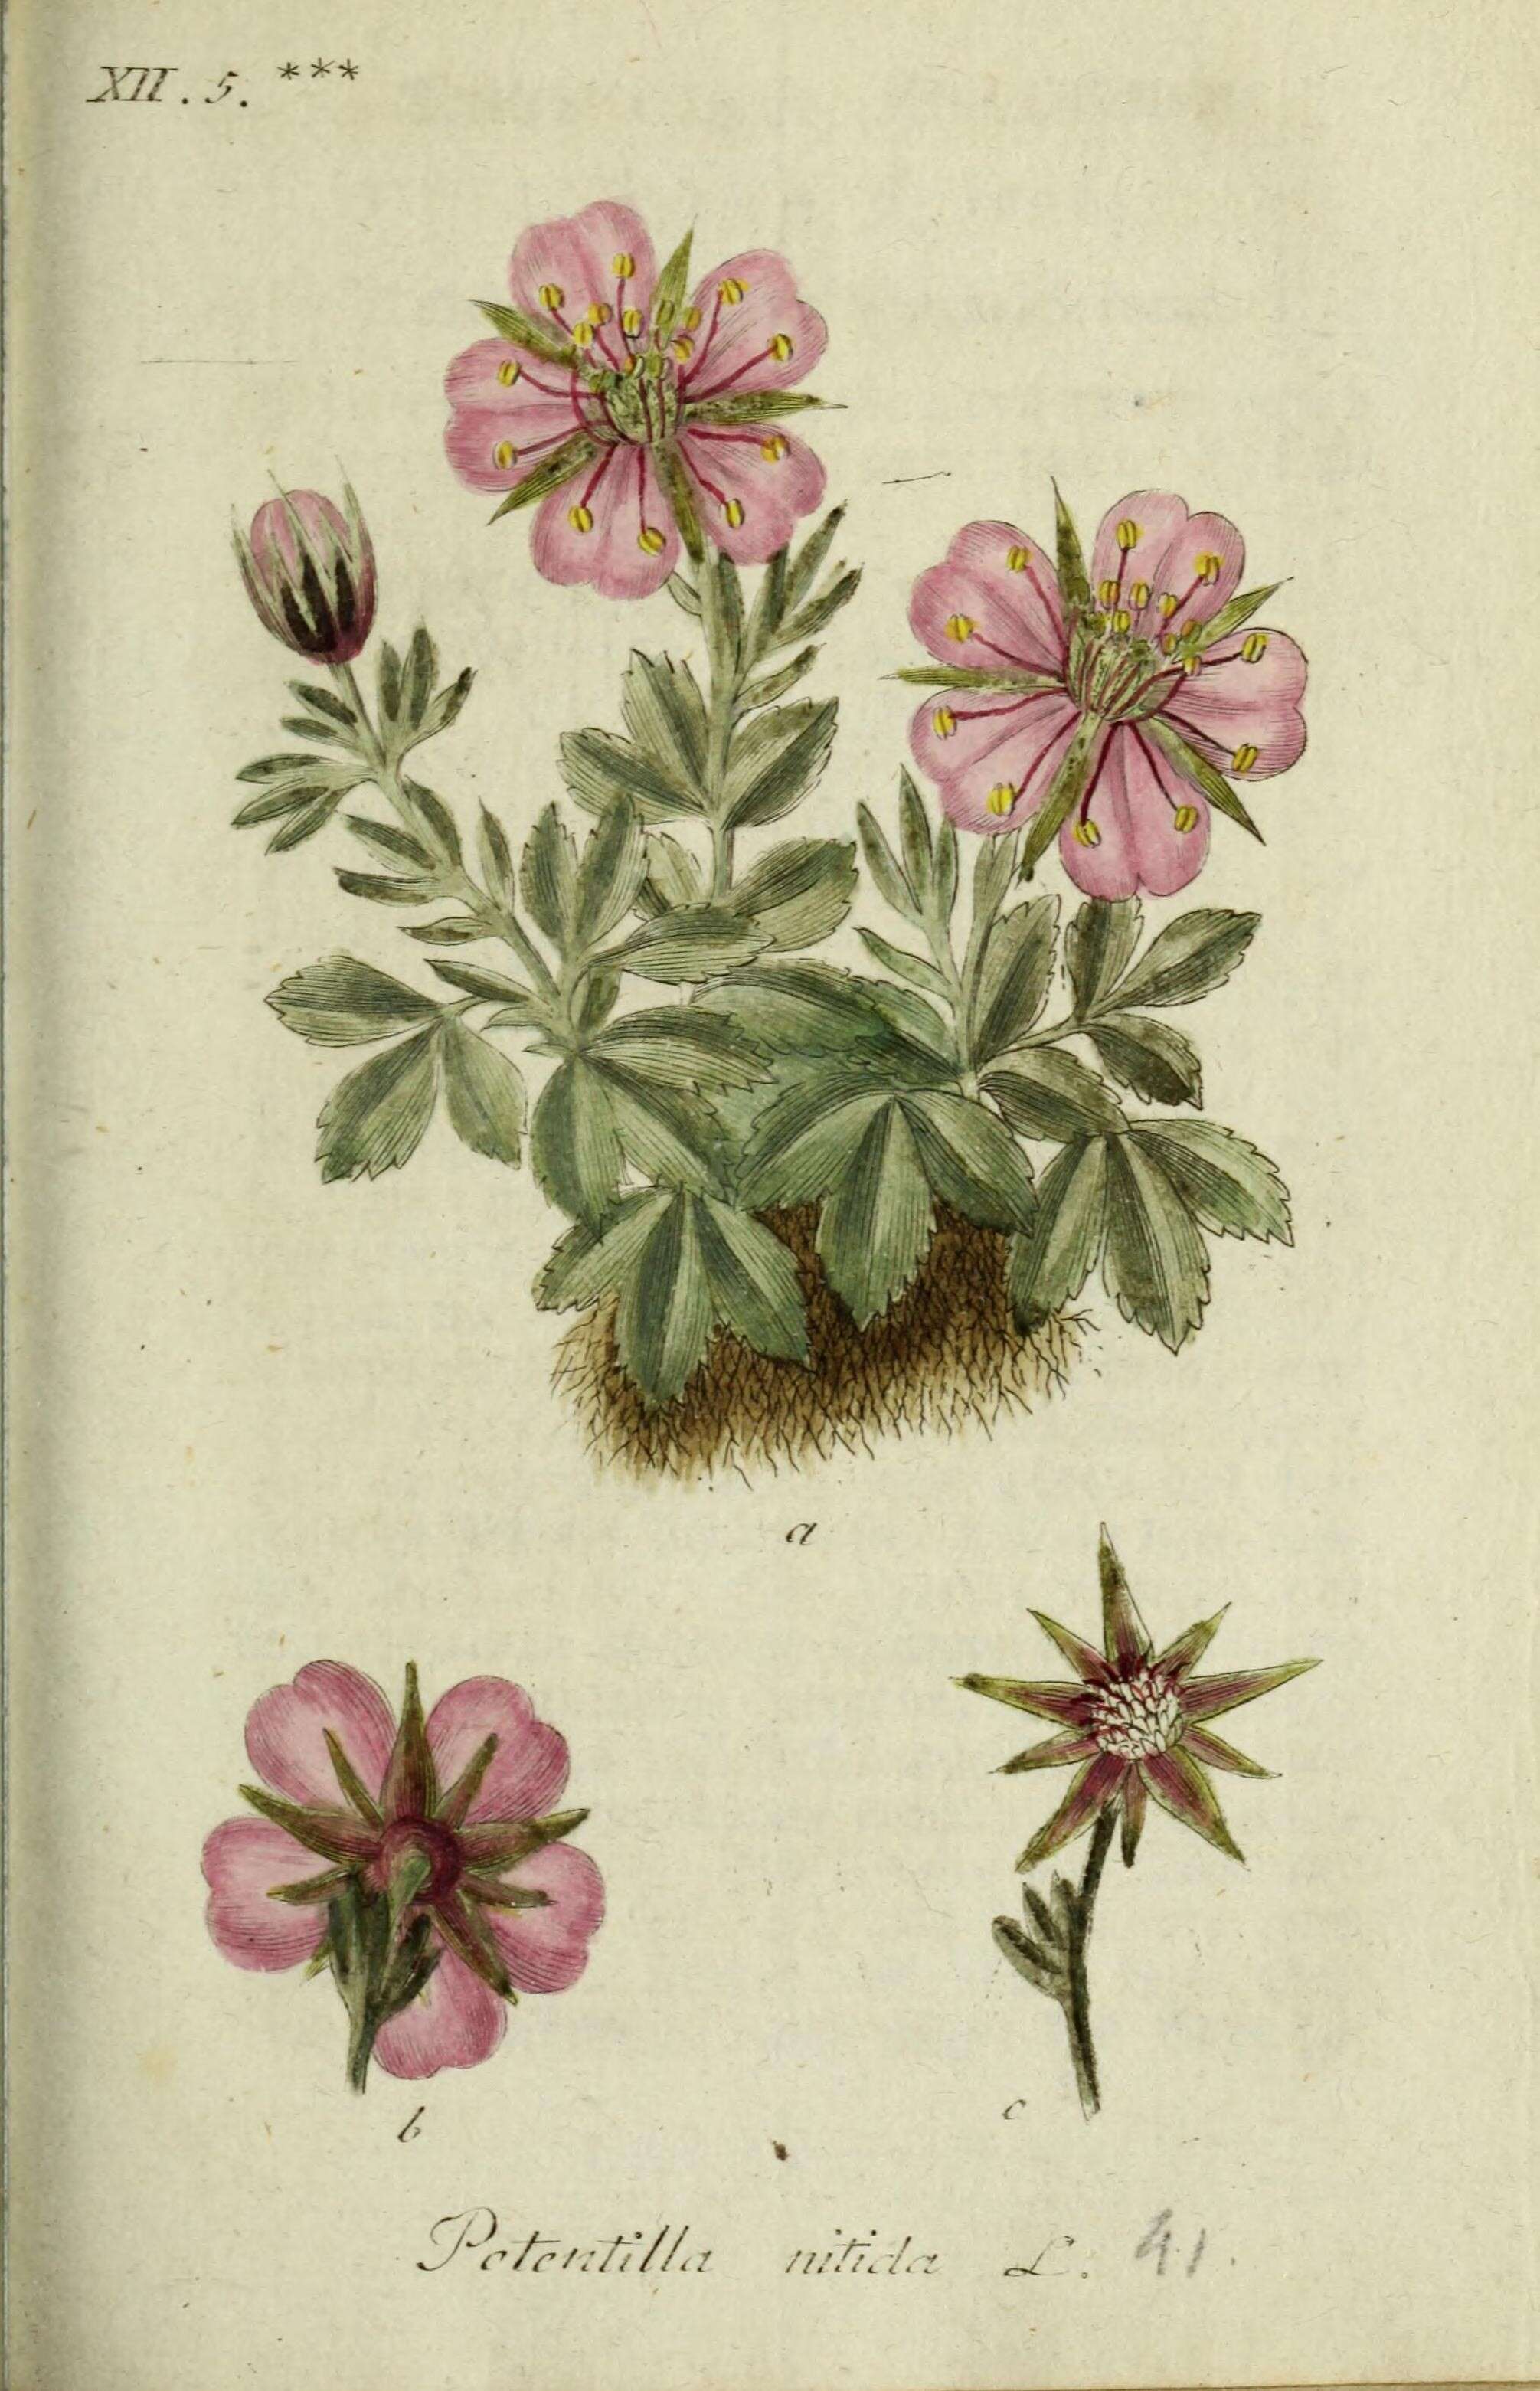 Image of pink cinquefoil